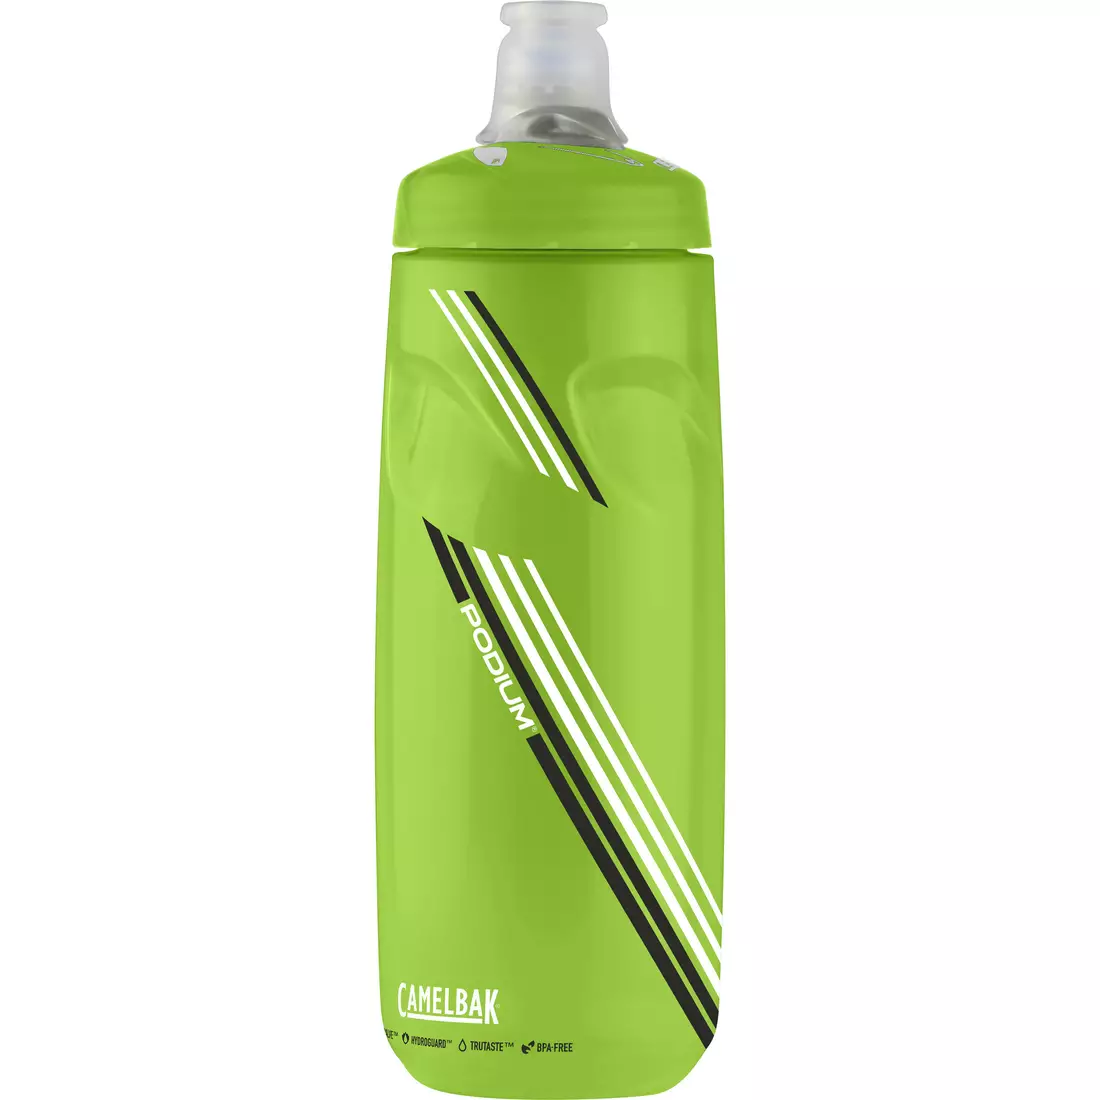 Camelbak SS17 Podium bicycle water bottle 24oz/ 710 ml Sprint Green